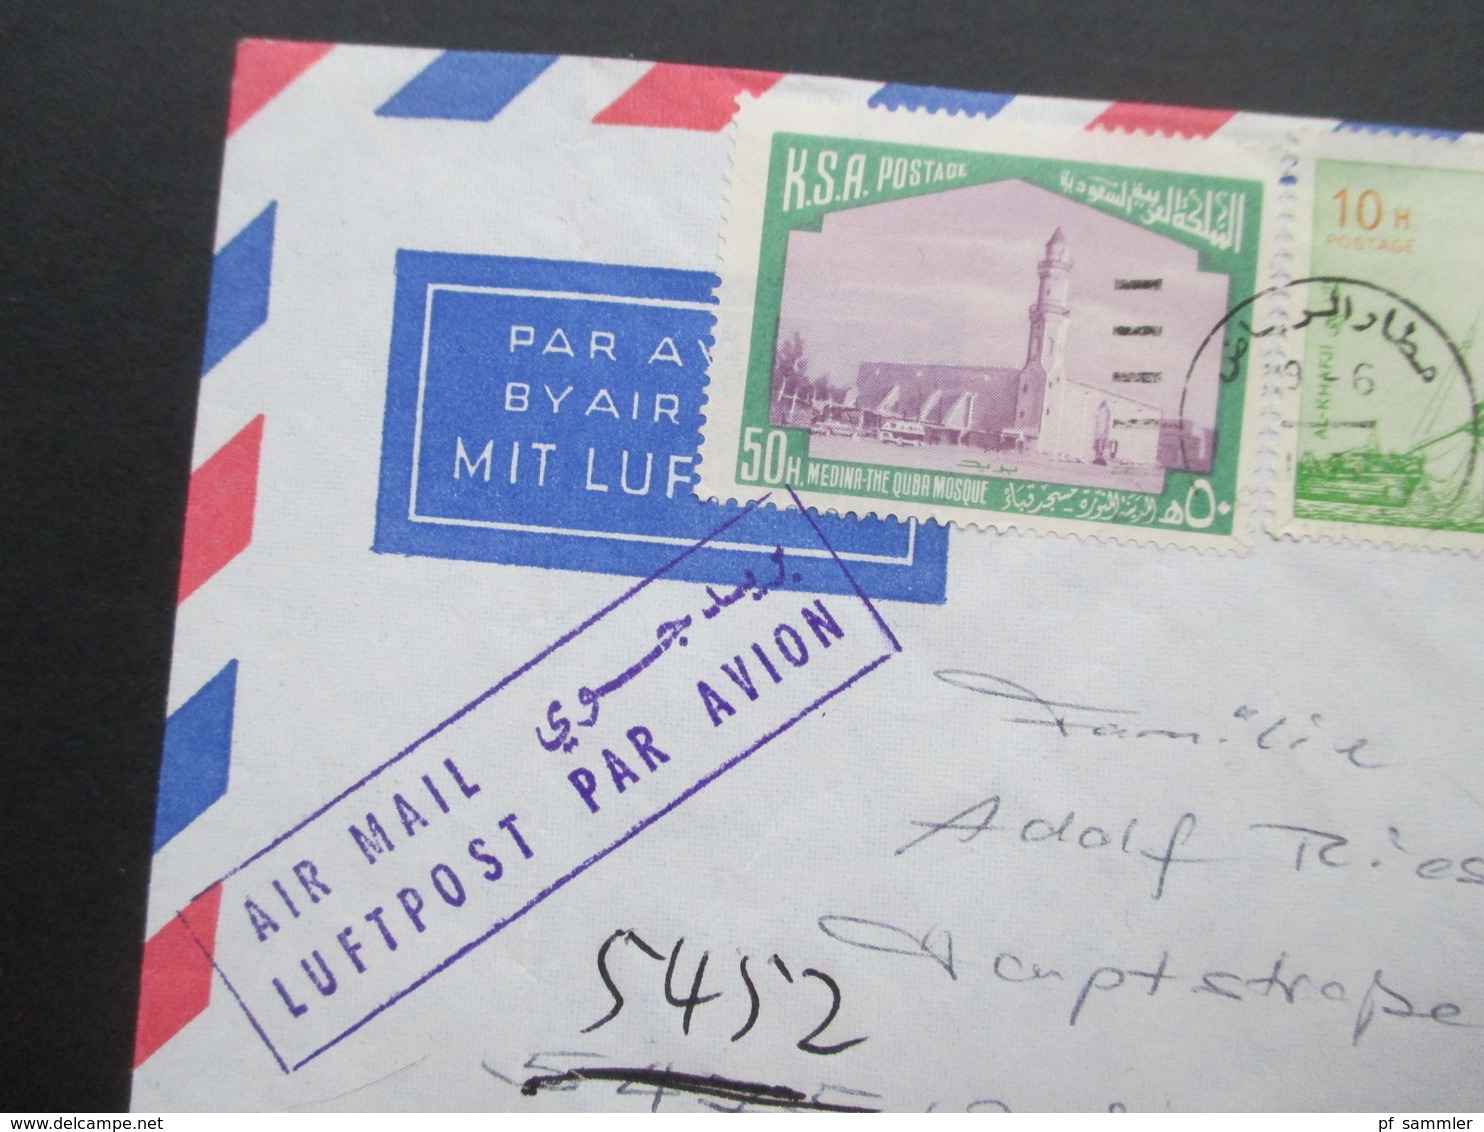 Saudi-Arabien 1977 KSA Postage MiF Air Mail / Luftpost Nach Weissenthurm 25th ANNIVERSARY OF THE RIAD - Saudi-Arabien